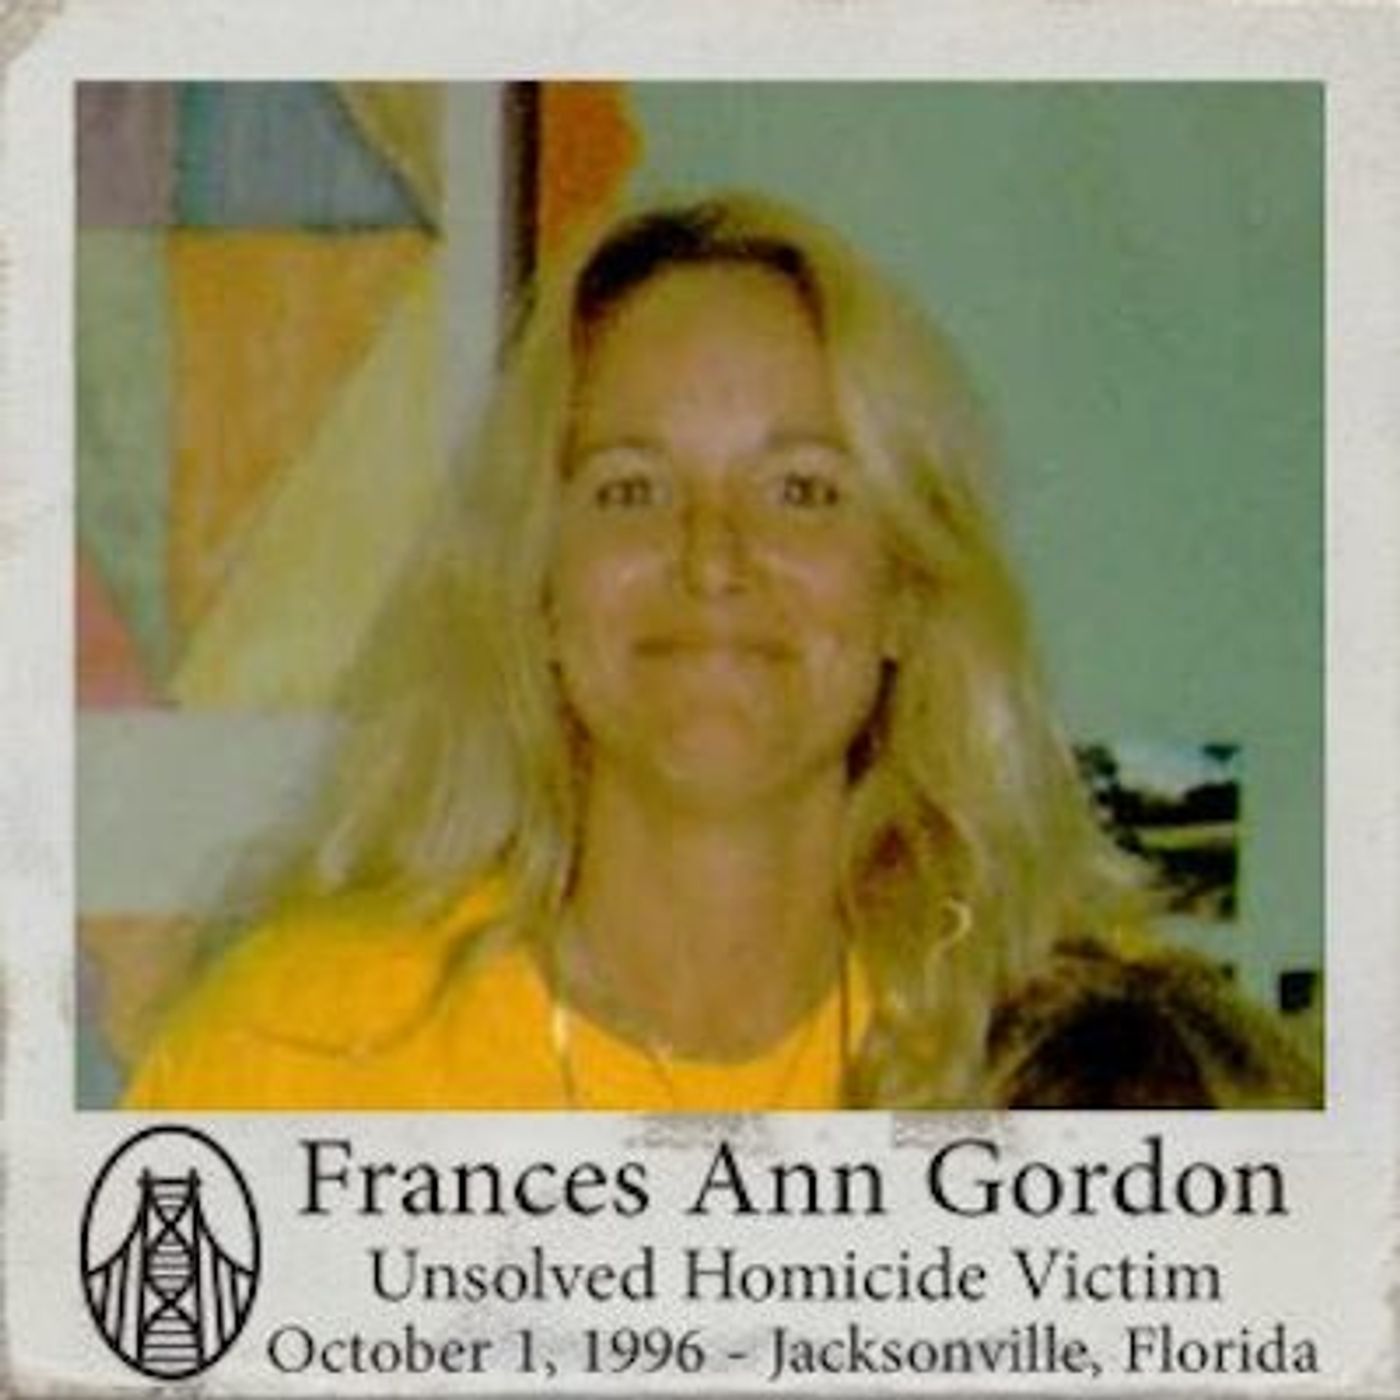 Episode 6: Frances Ann Gordon